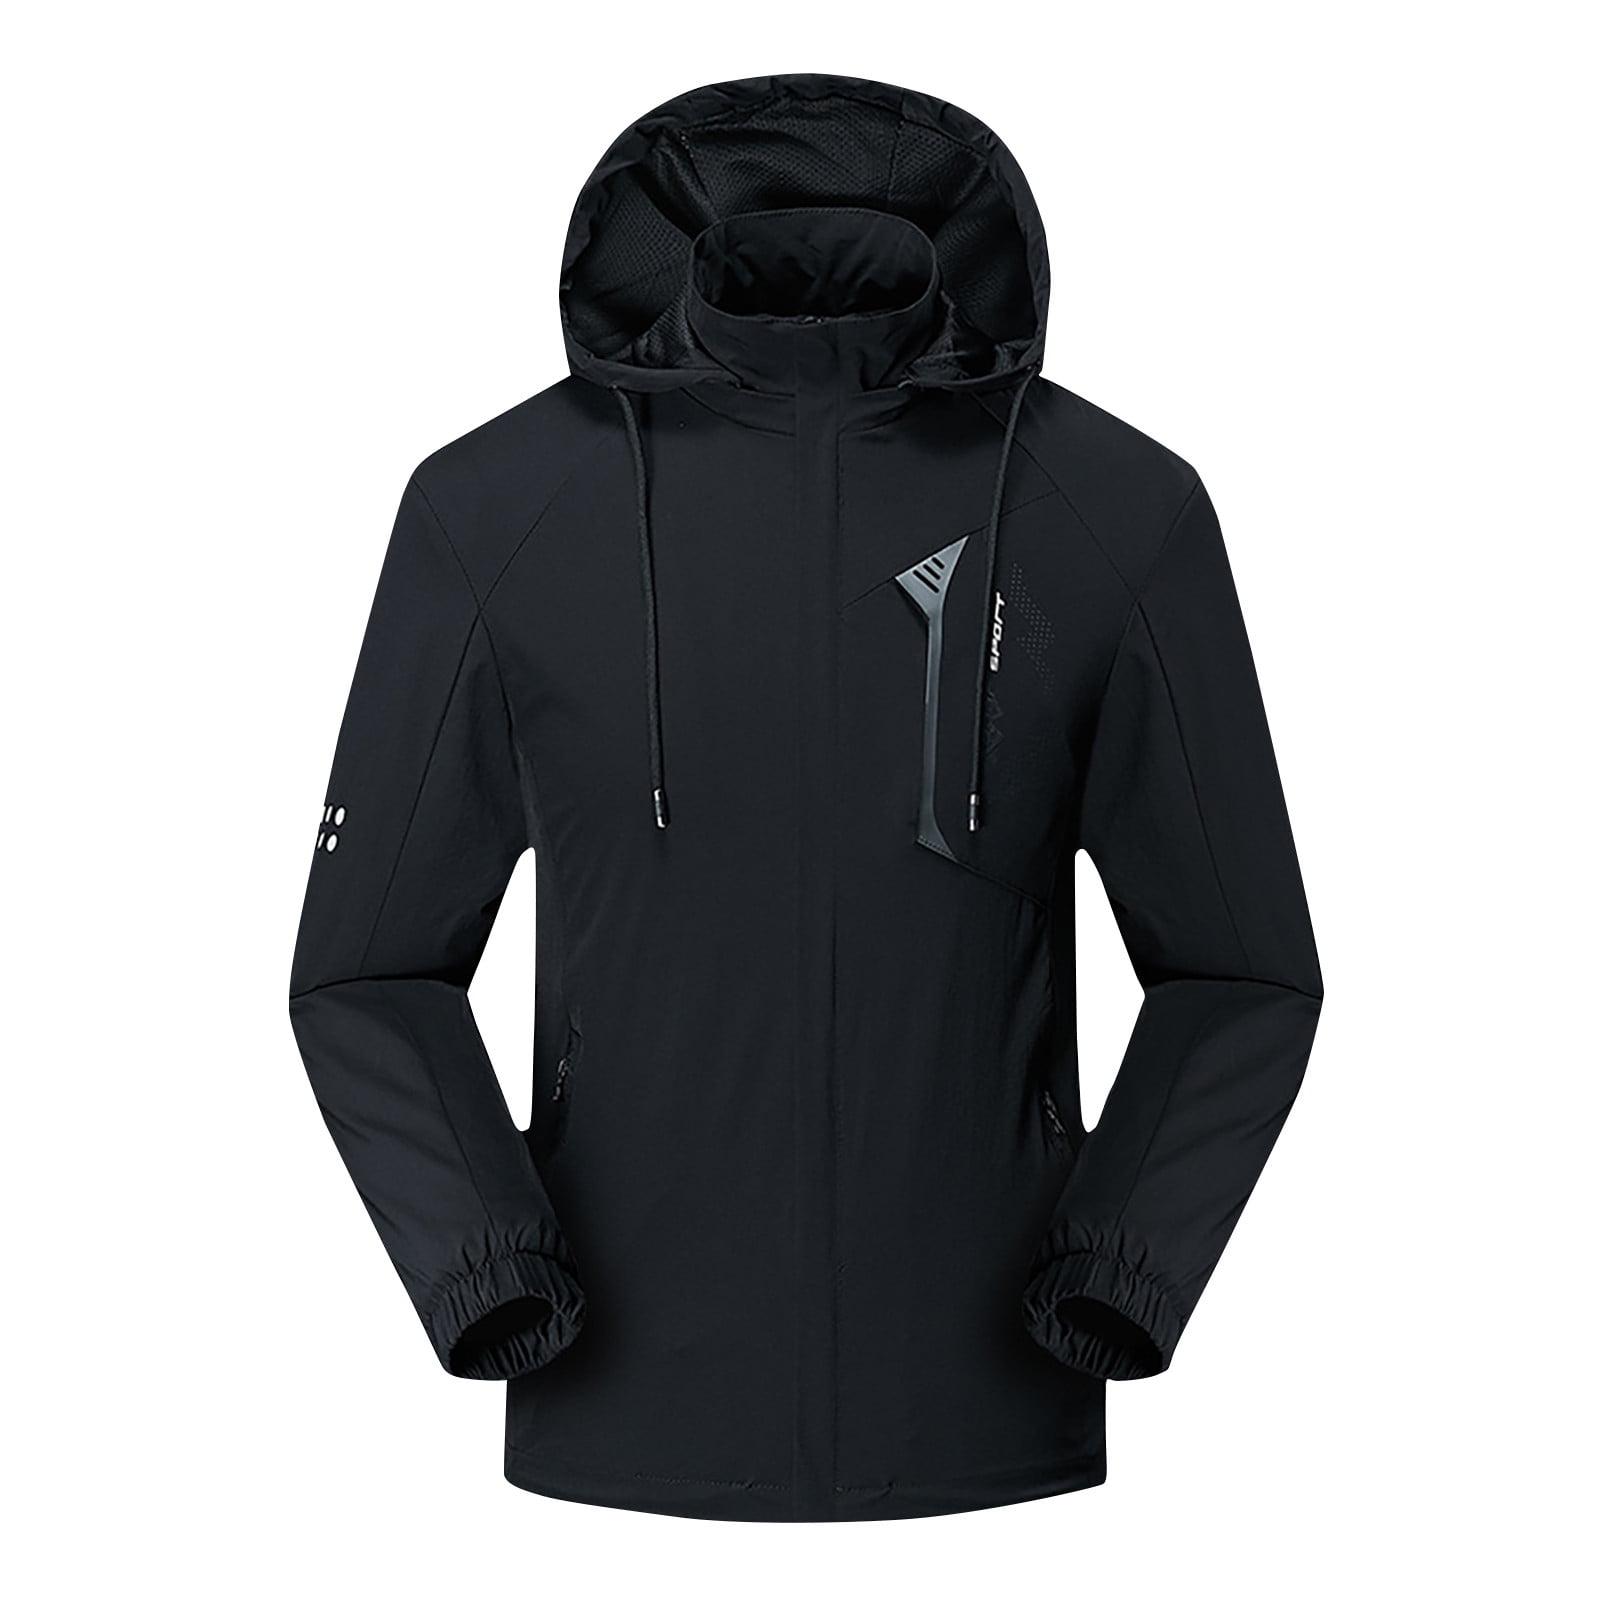 HAPIMO Sales Men's Outdoor Jacket Waterproof And Stain-Resistant Wind ...